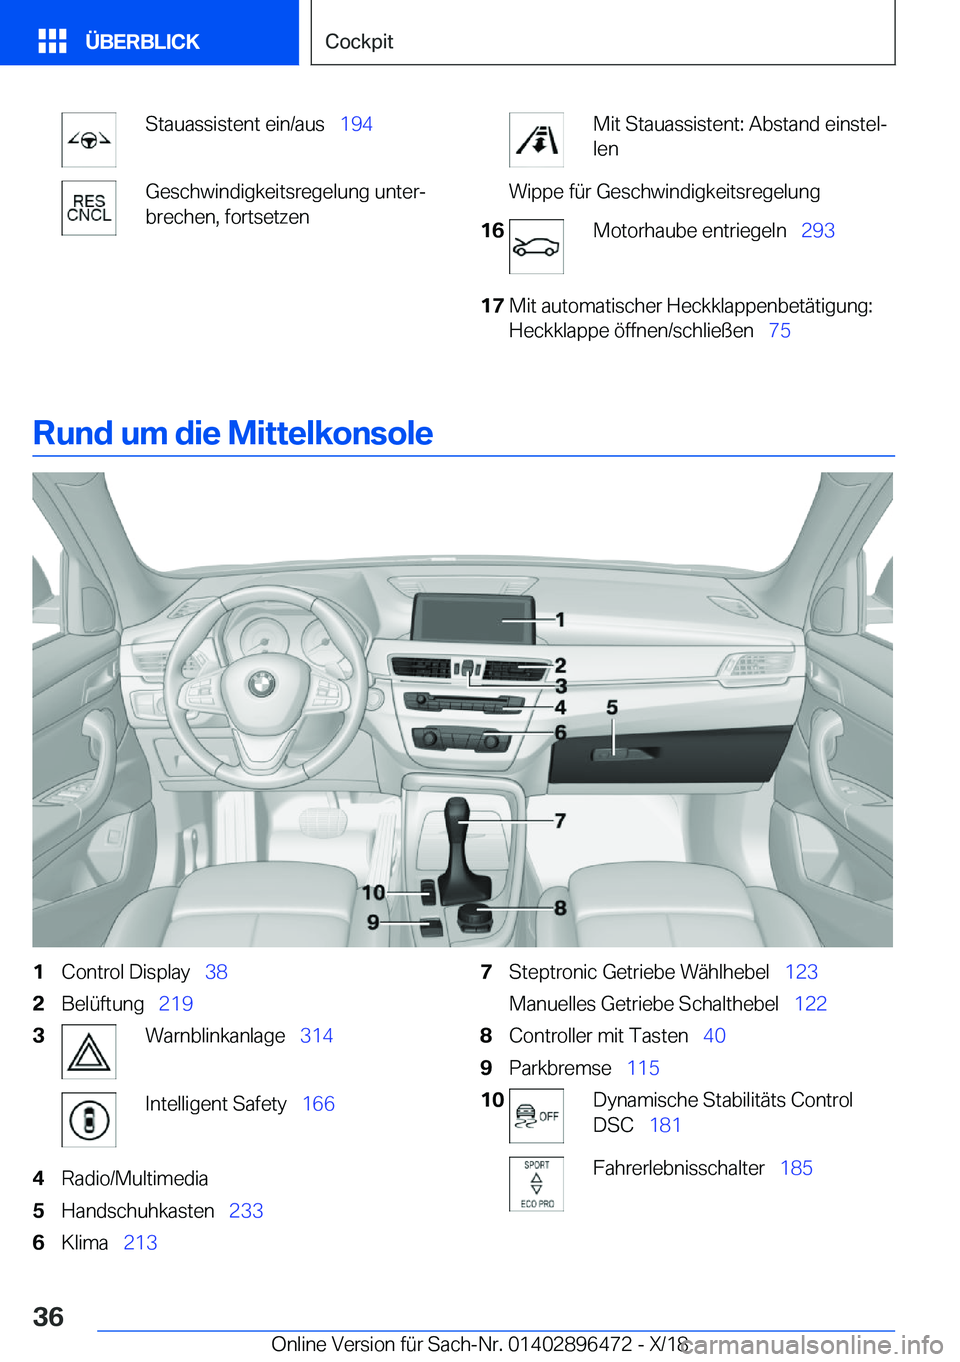 BMW X1 2019  Betriebsanleitungen (in German) �S�t�a�u�a�s�s�i�s�t�e�n�t��e�i�n�/�a�u�s\_�1�9�4�G�e�s�c�h�w�i�n�d�i�g�k�e�i�t�s�r�e�g�e�l�u�n�g��u�n�t�e�rj
�b�r�e�c�h�e�n�,��f�o�r�t�s�e�t�z�e�n�M�i�t��S�t�a�u�a�s�s�i�s�t�e�n�t�:��A�b�s�t�